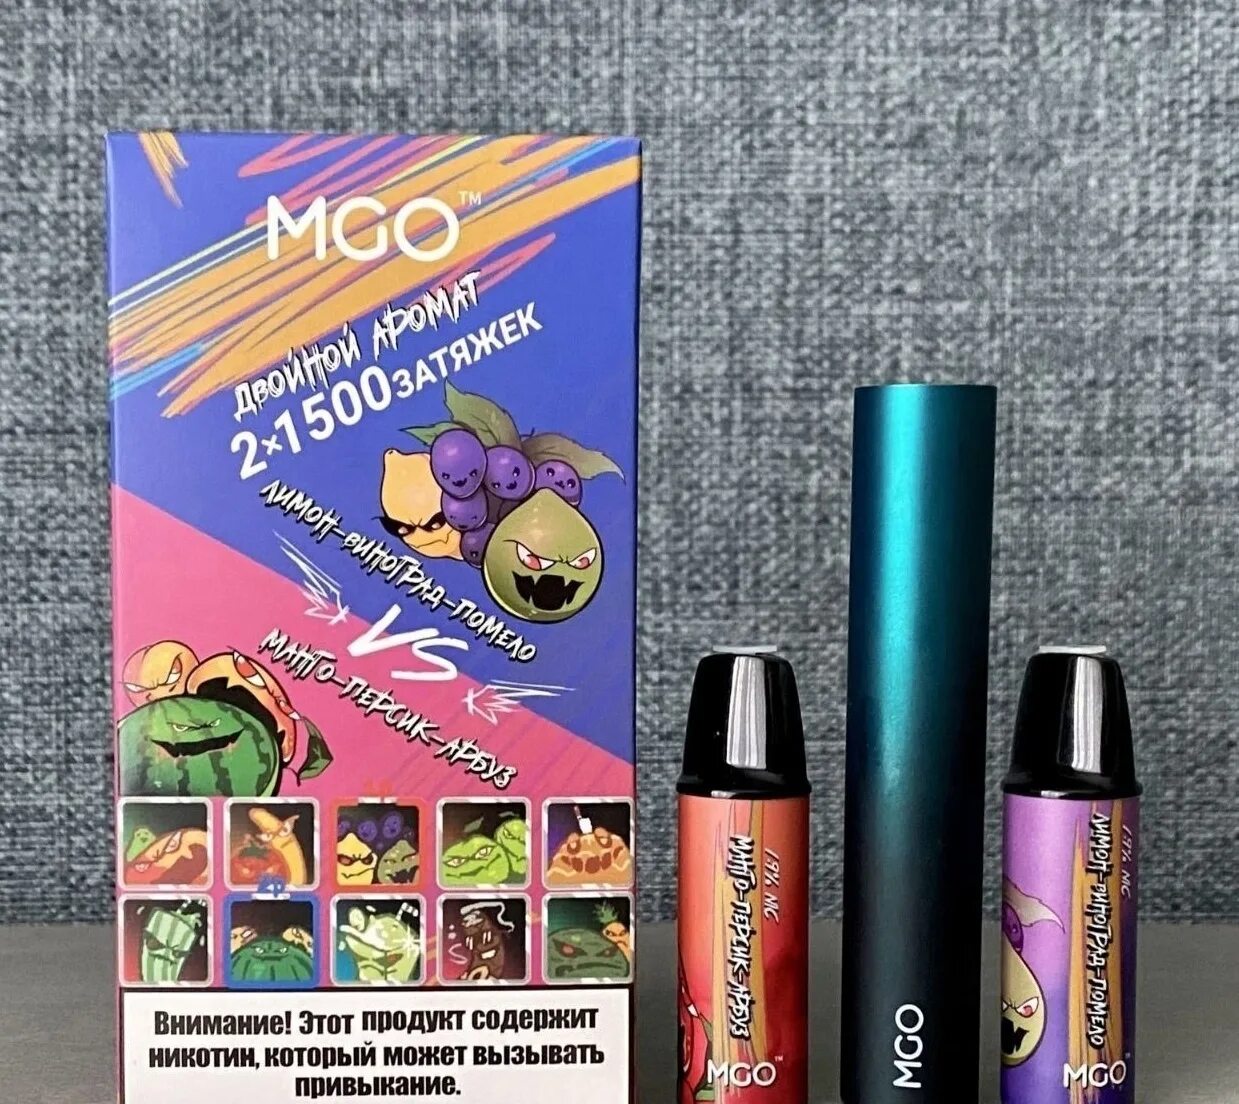 Mgo картриджи купить. MGO электронная сигарета. MGO электронная сигарета с картриджами. MGO картриджи вкусы. МГО электронные сигареты картридж.